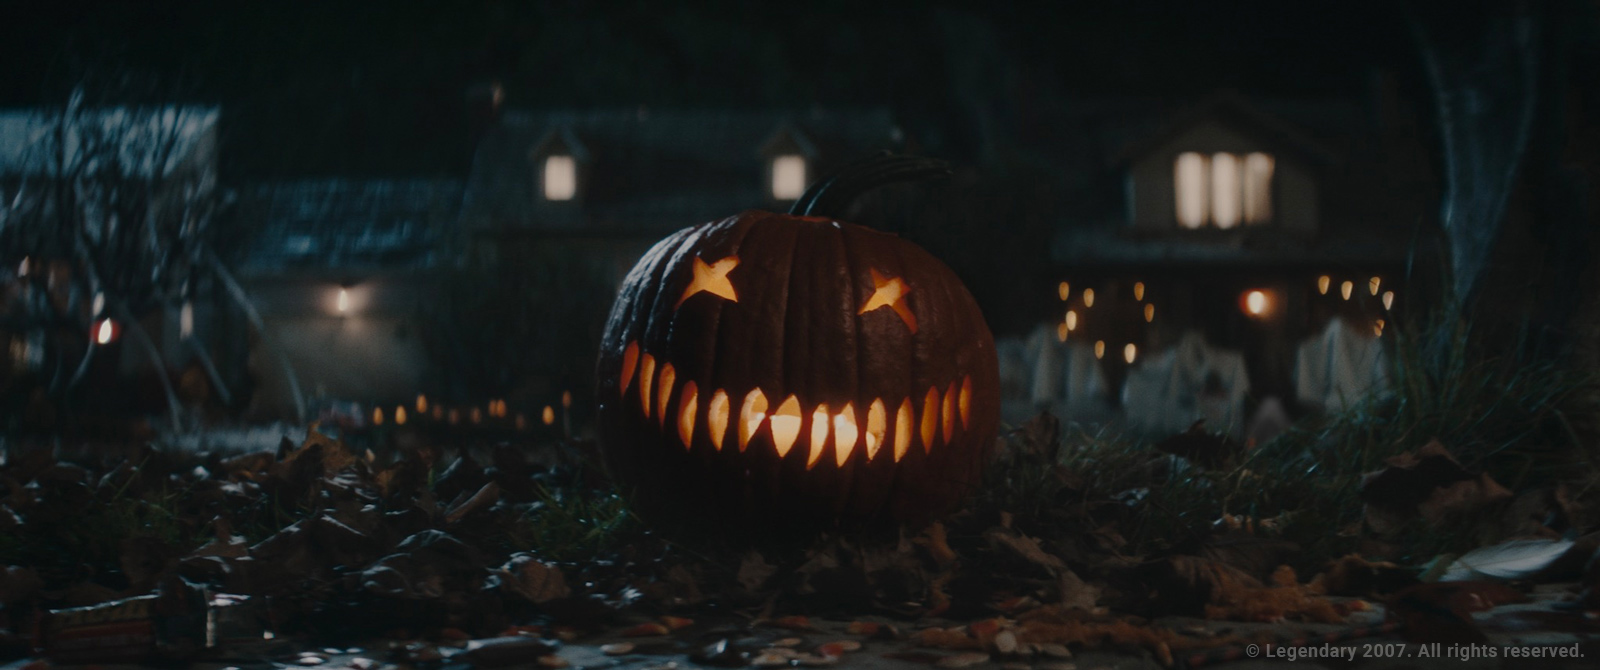 Best Halloween Themed TV Episodes To Binge